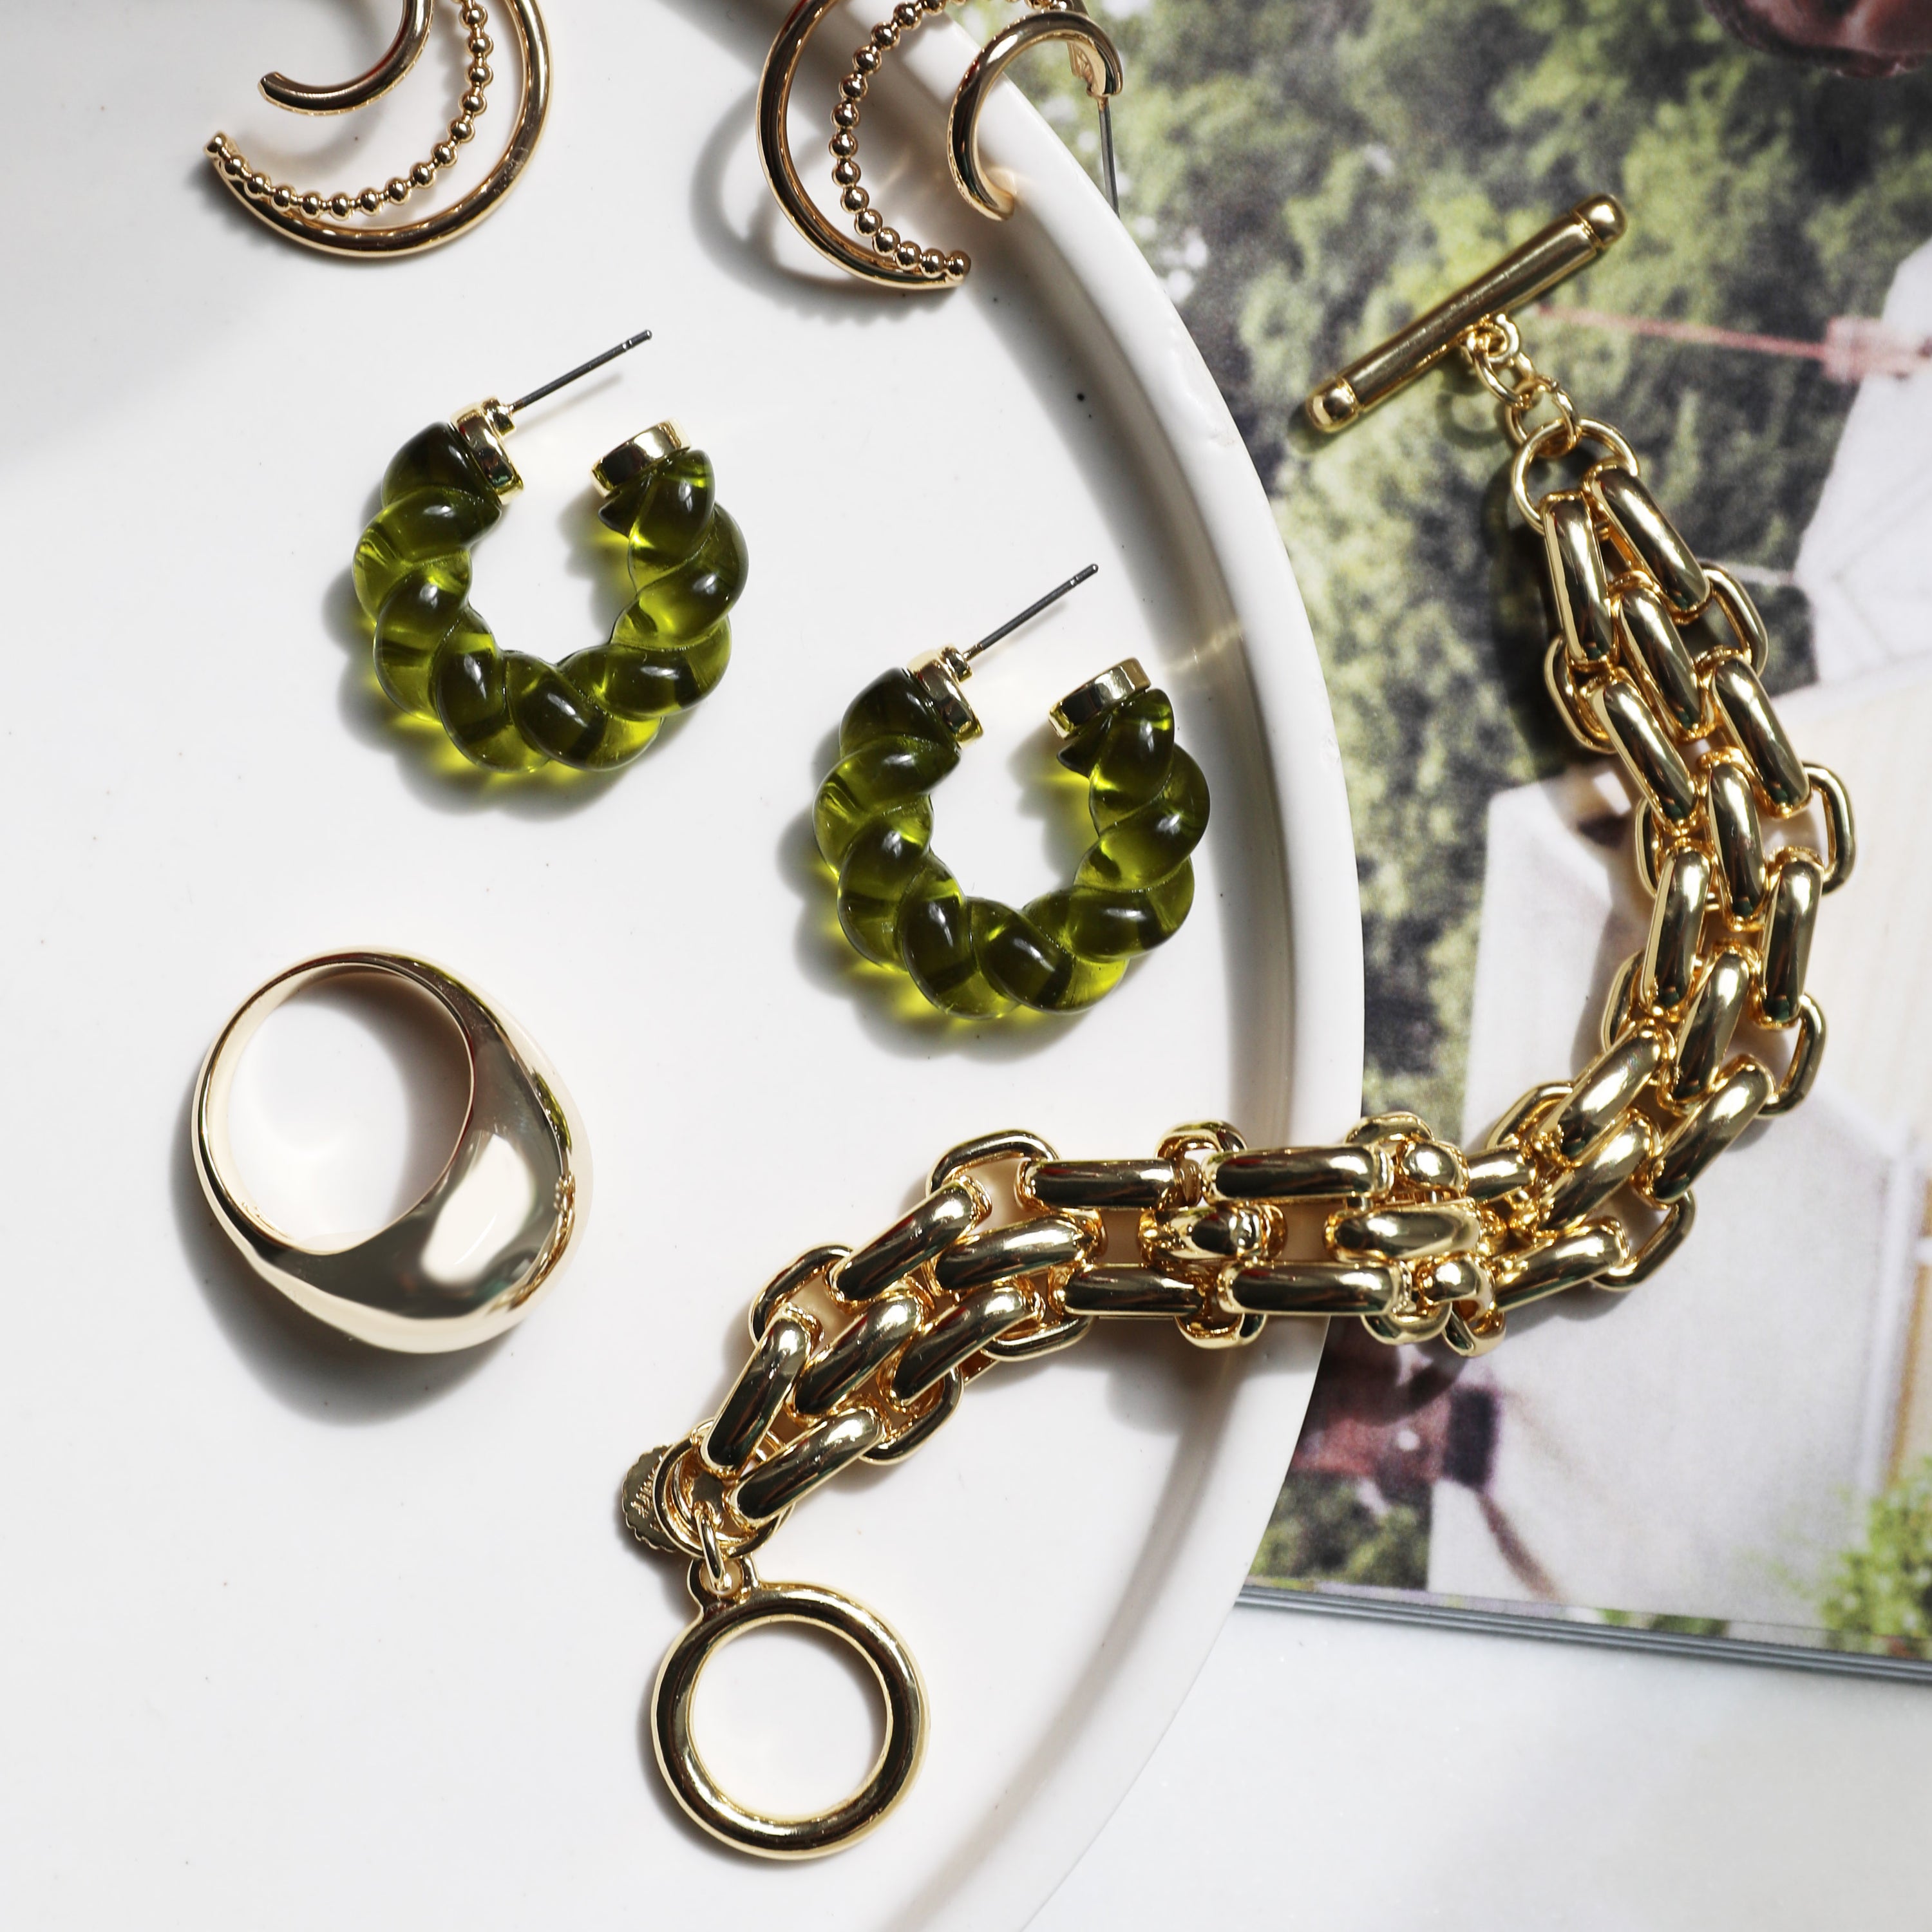 Brooklyn Toggle Bracelet – Token Jewelry